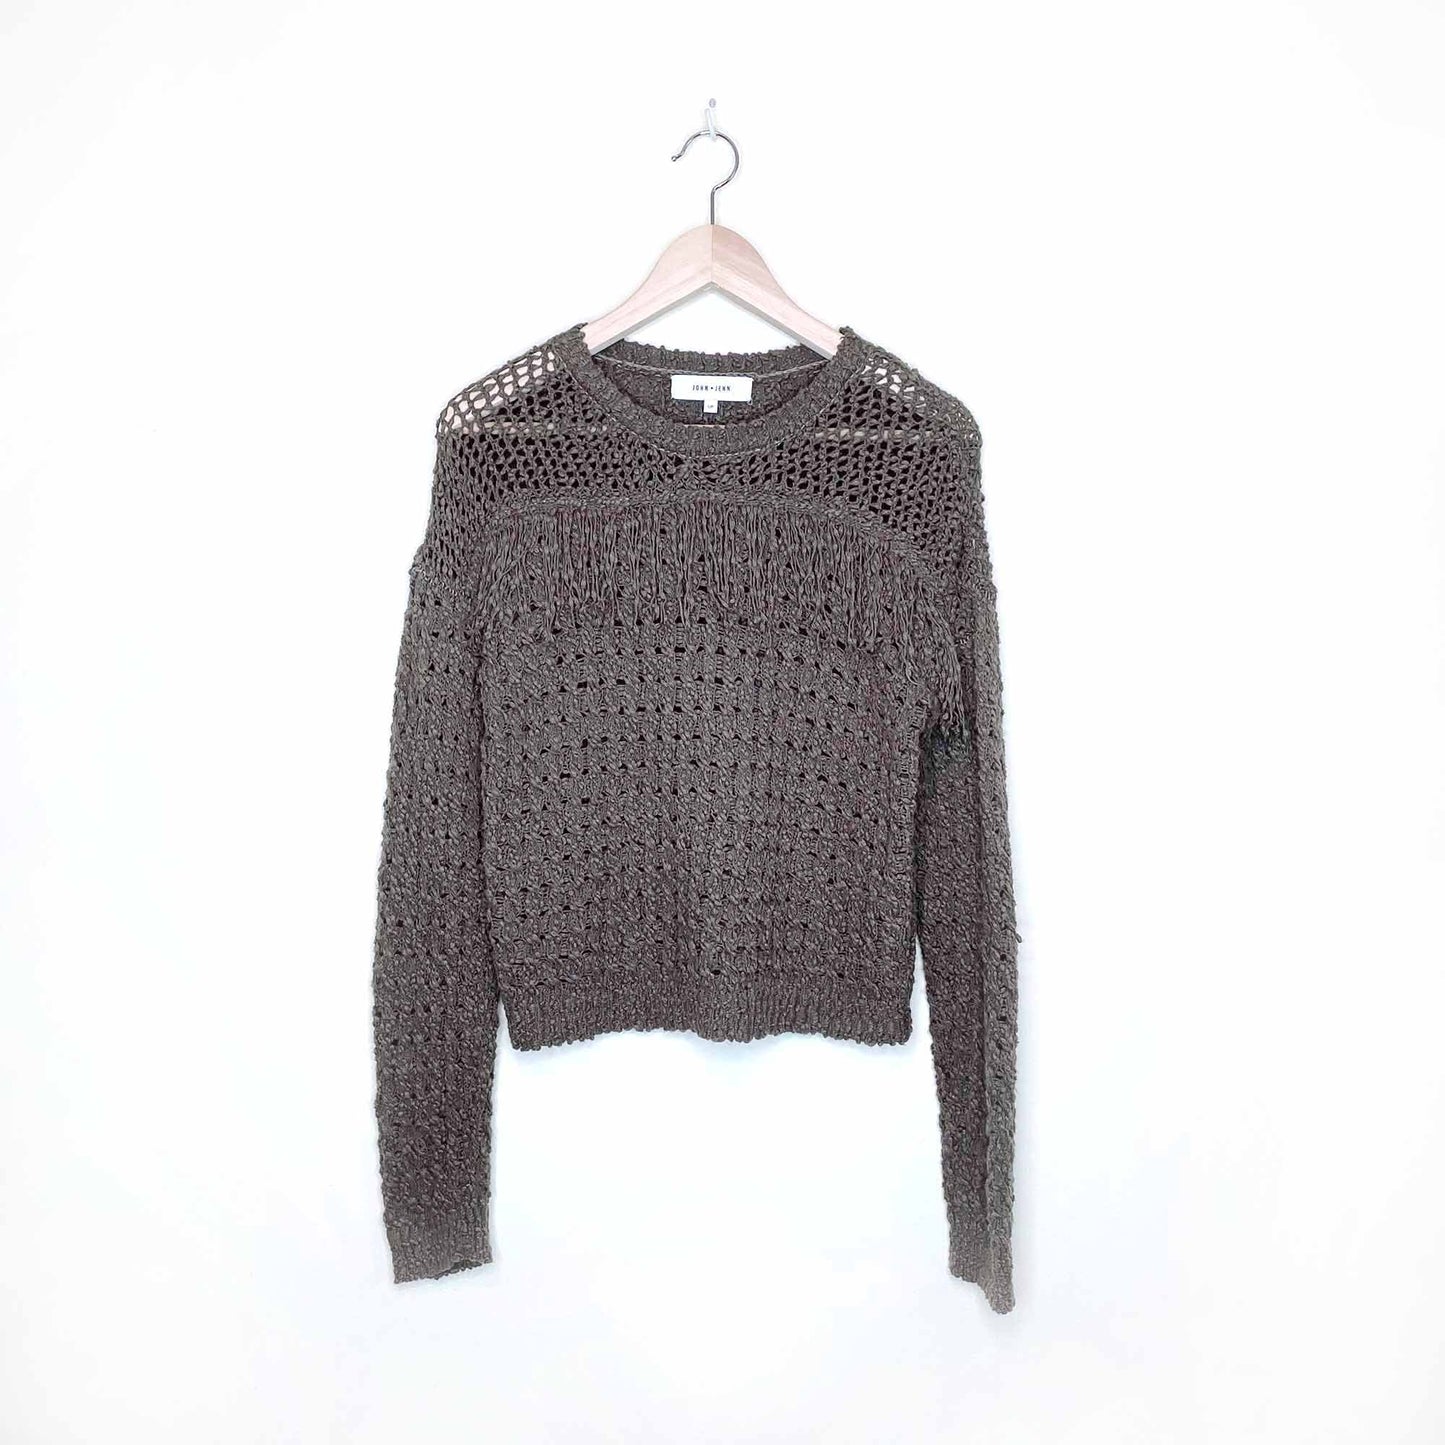 john + jenn loose knit fringe front sweater - size small